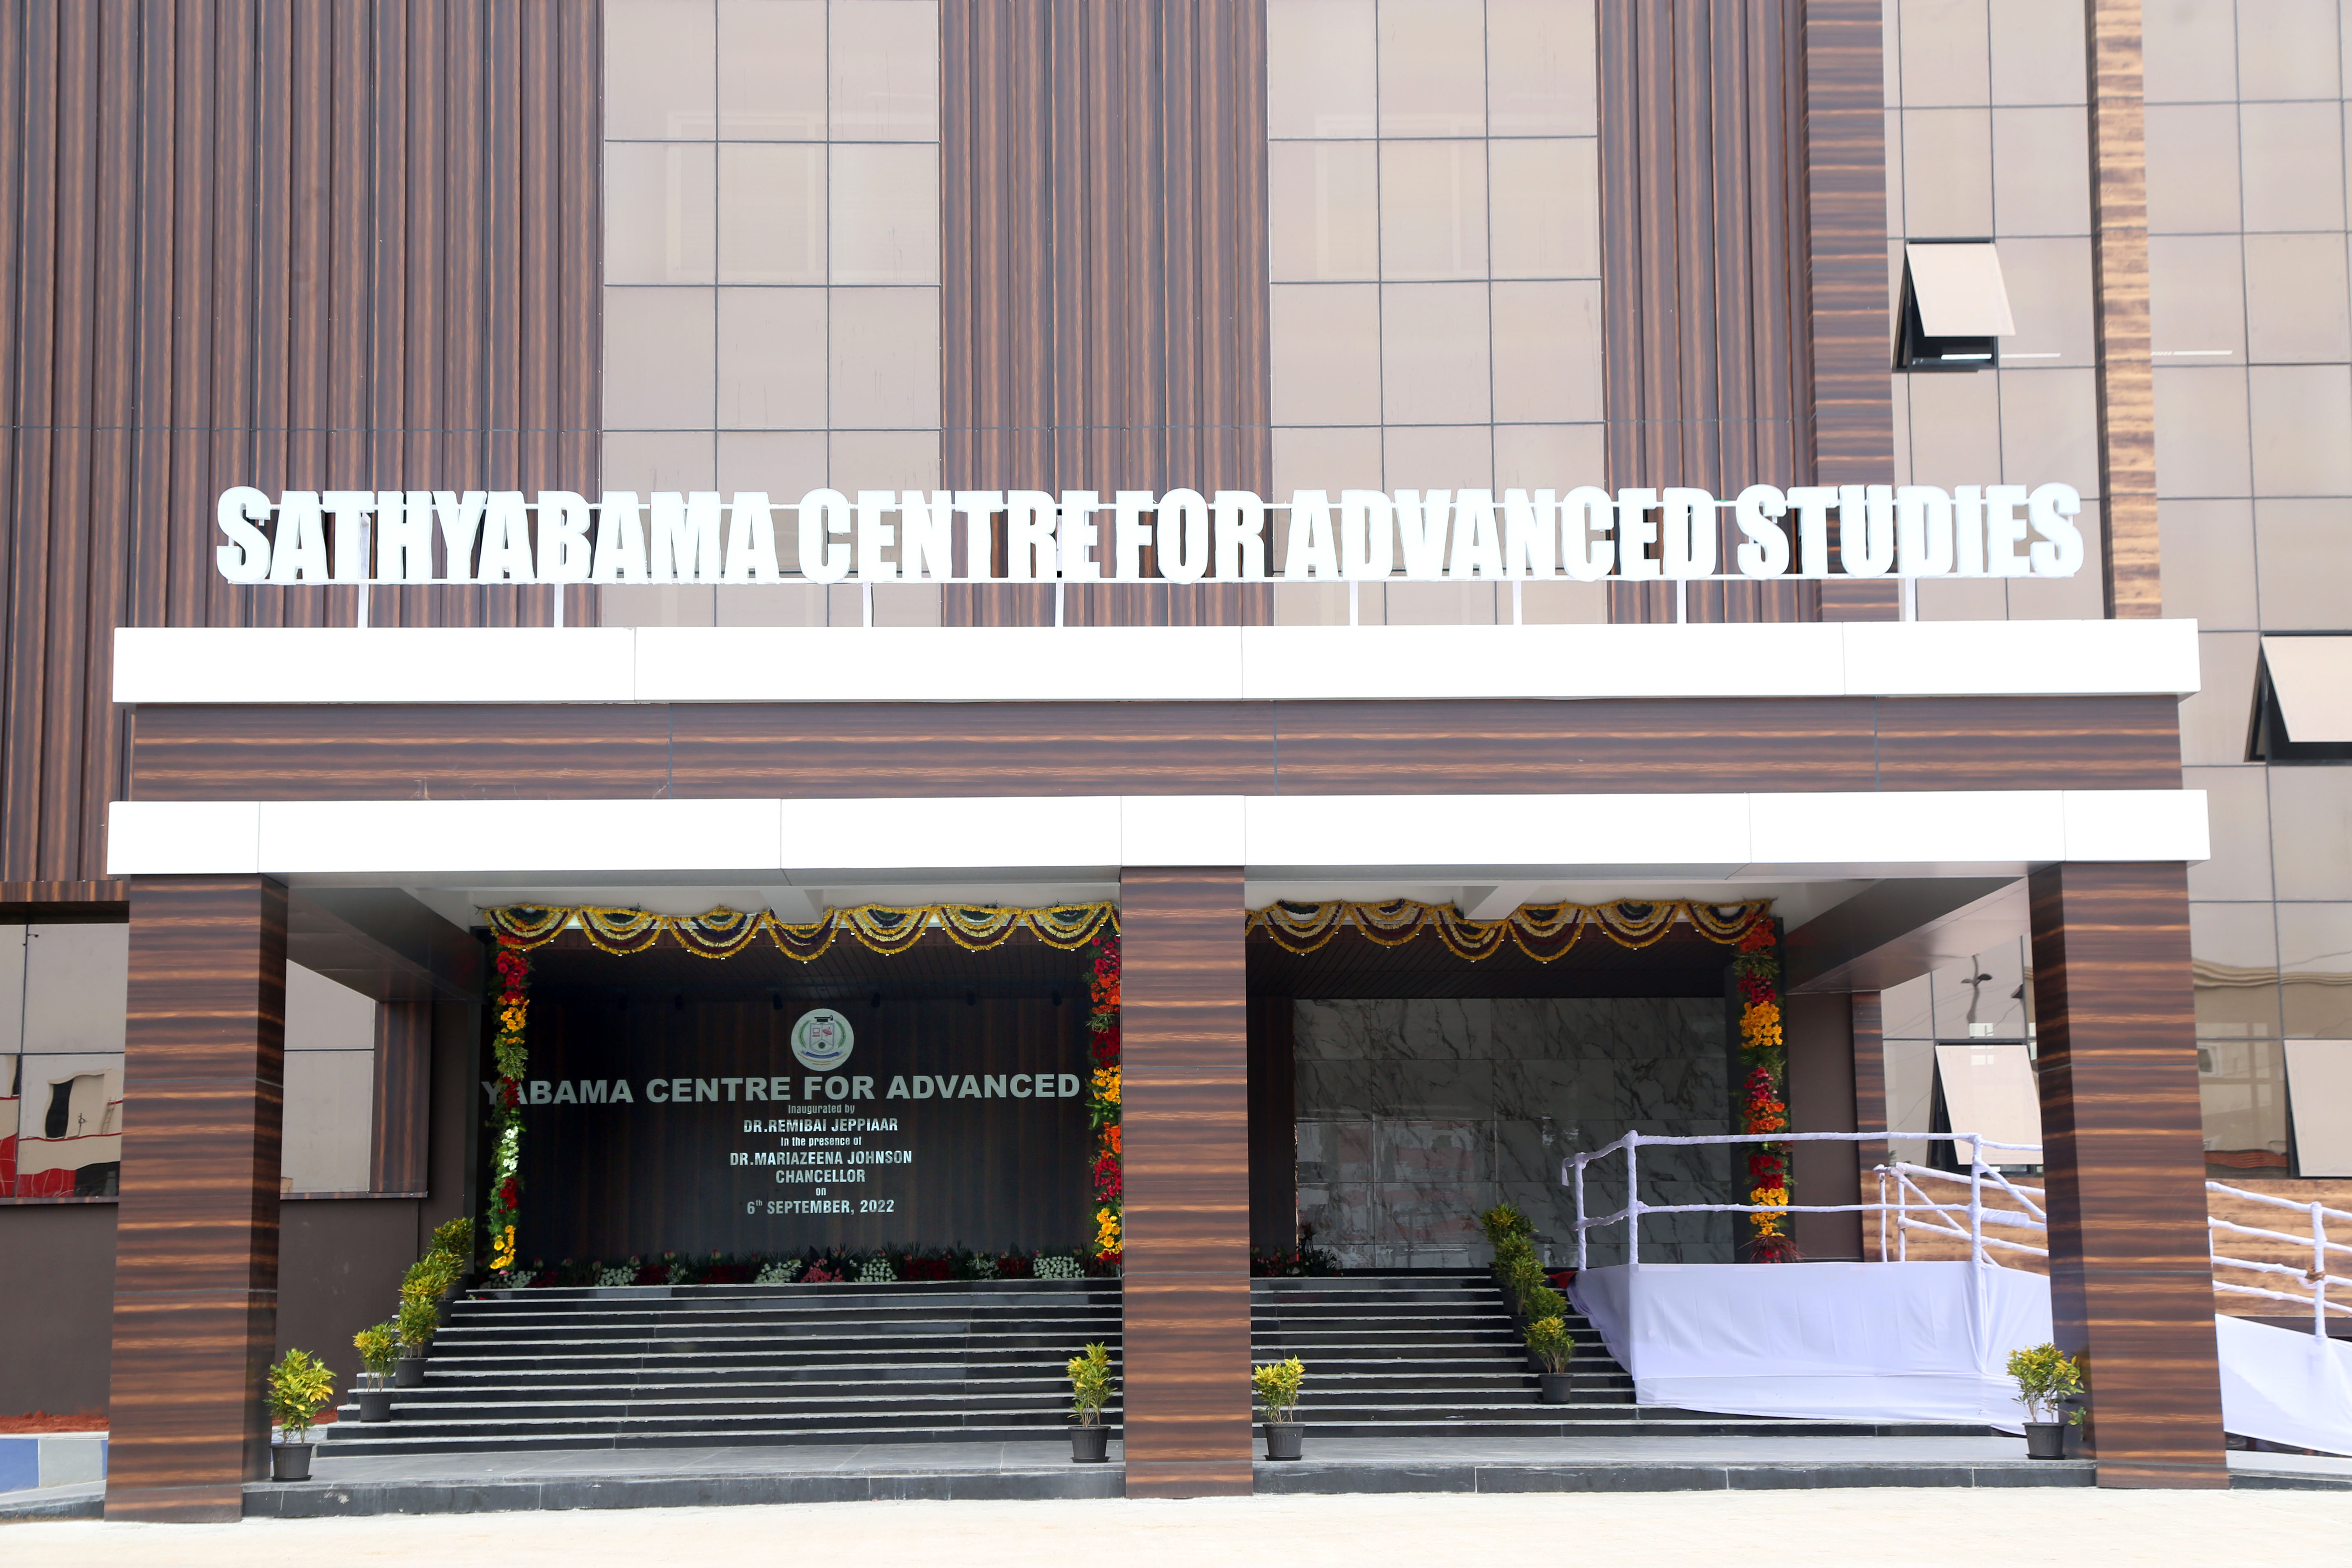 Sathyabama Center for Advanced Studies